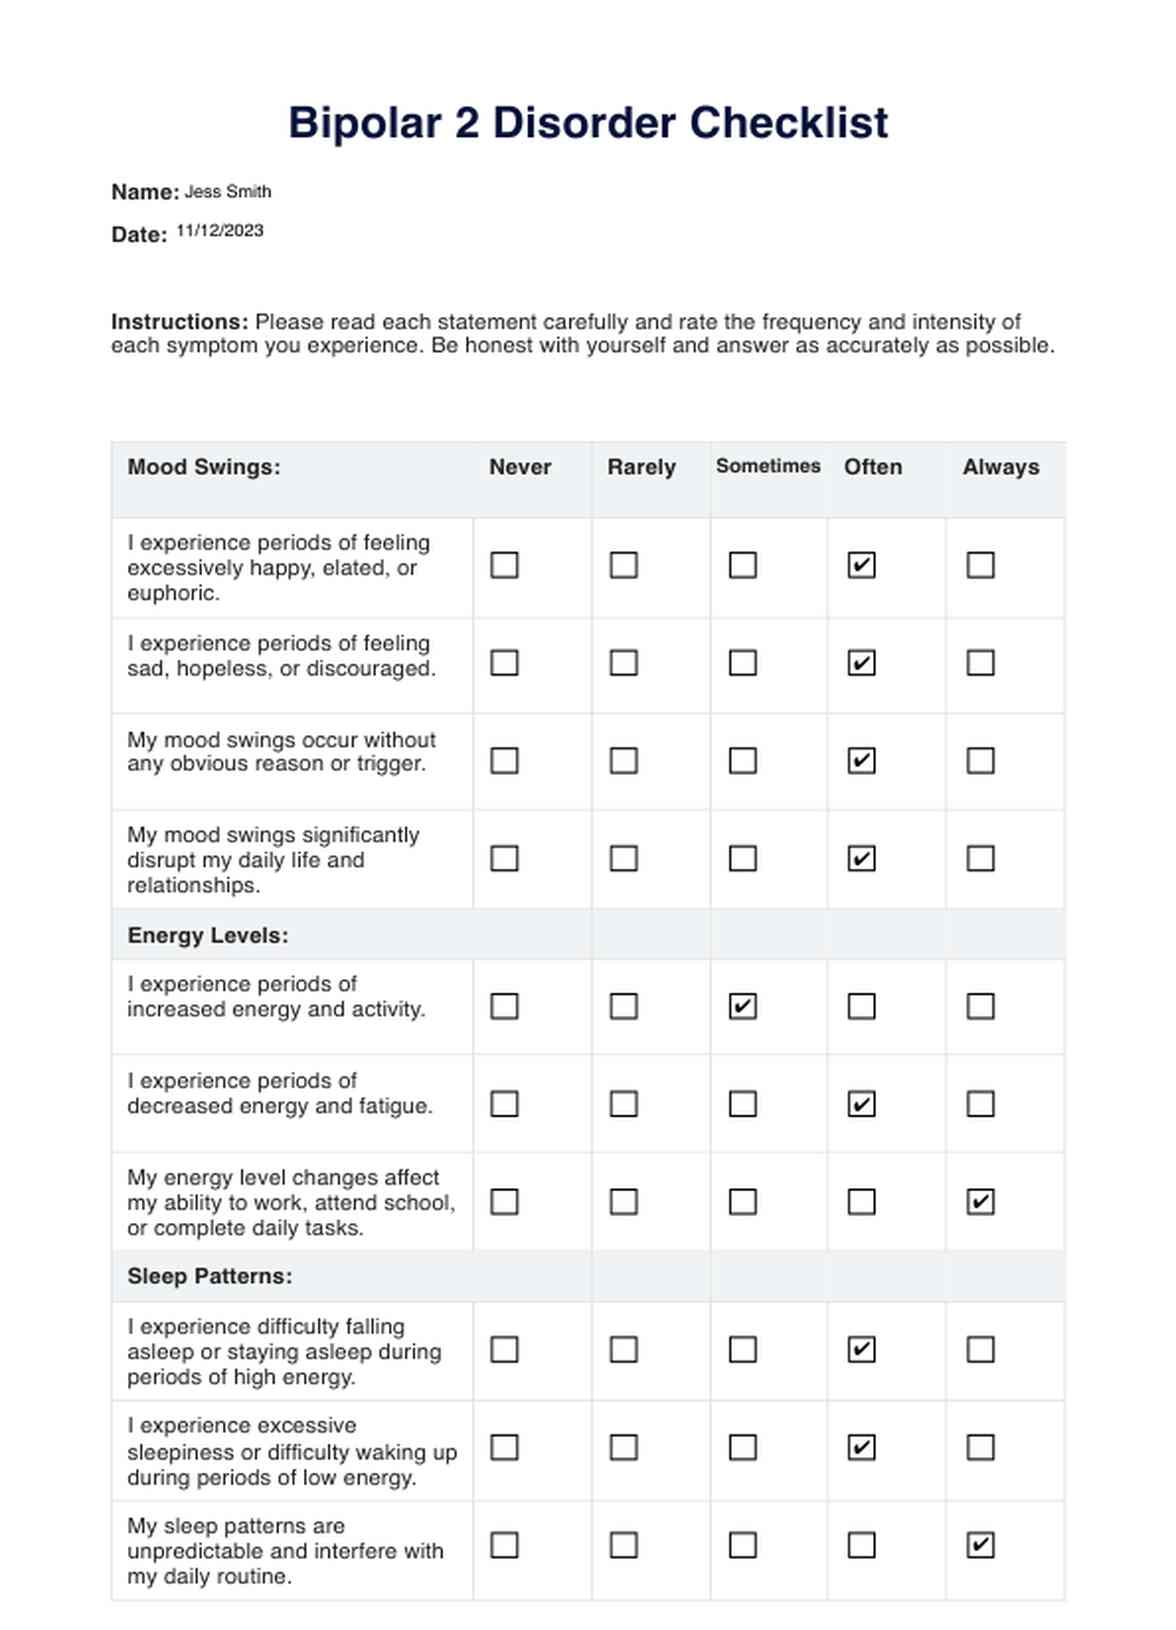 Bipolar 2 Checklist PDF Example